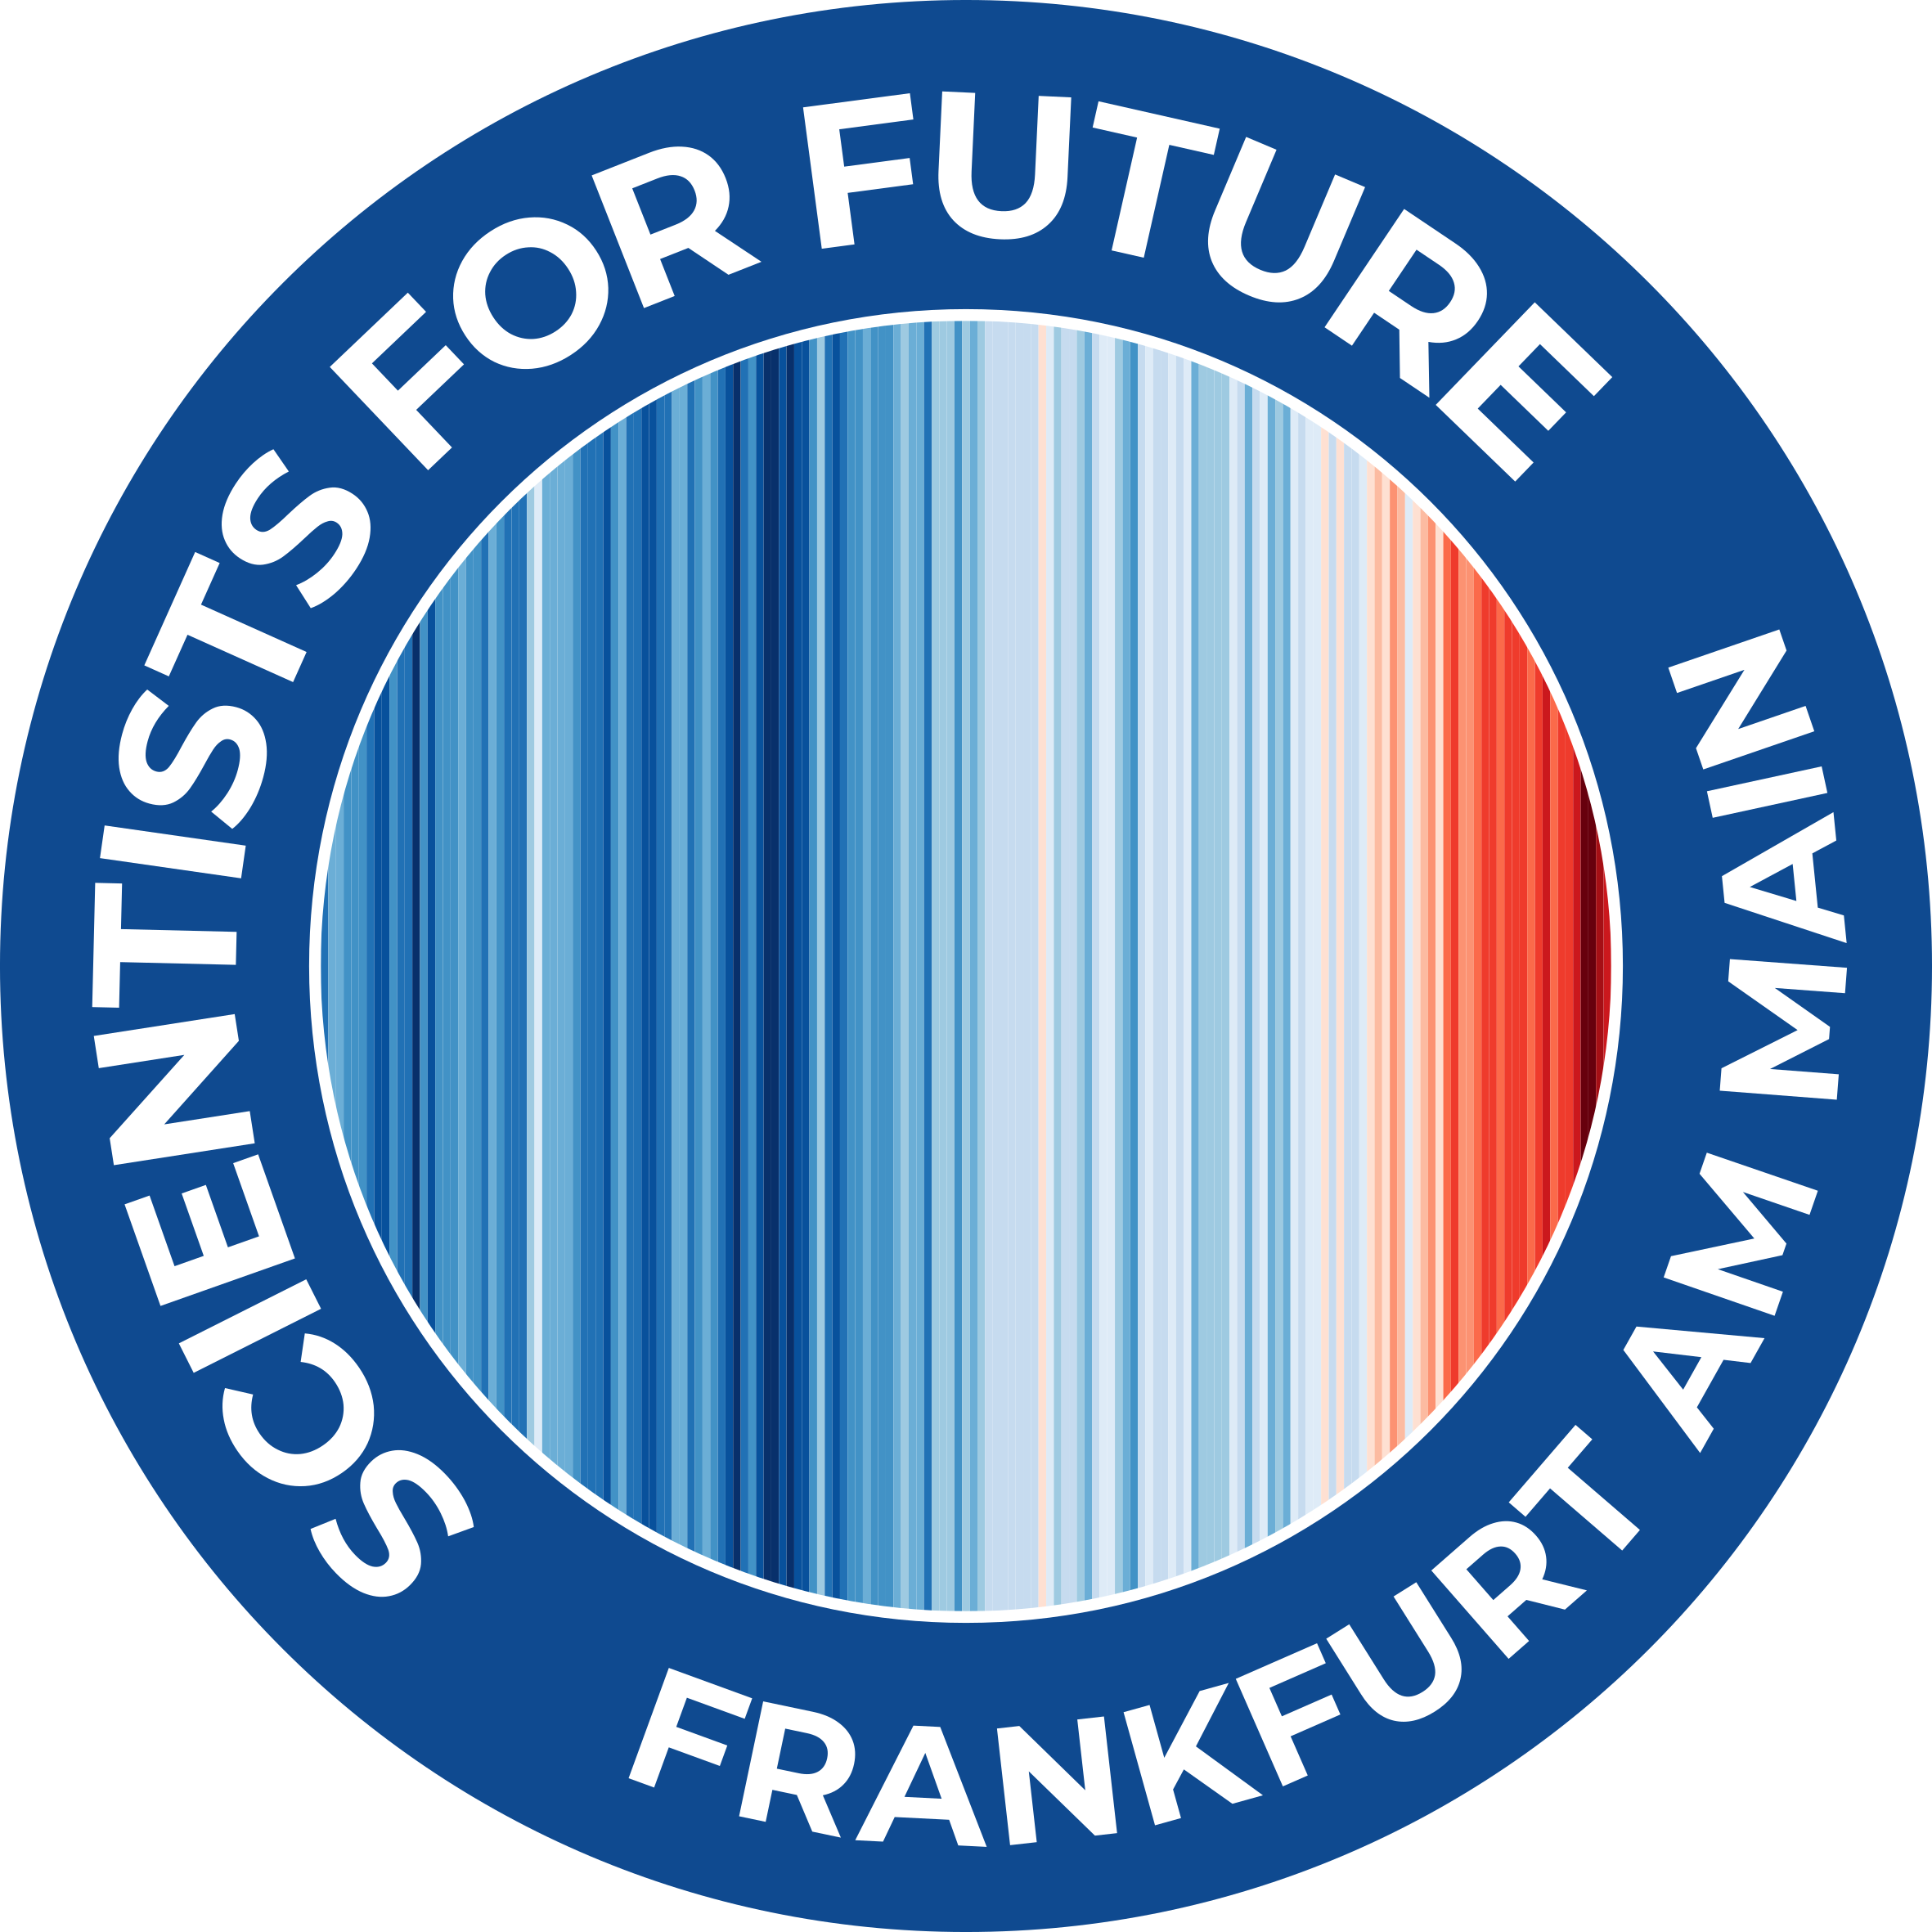 Scientists for Future FFM